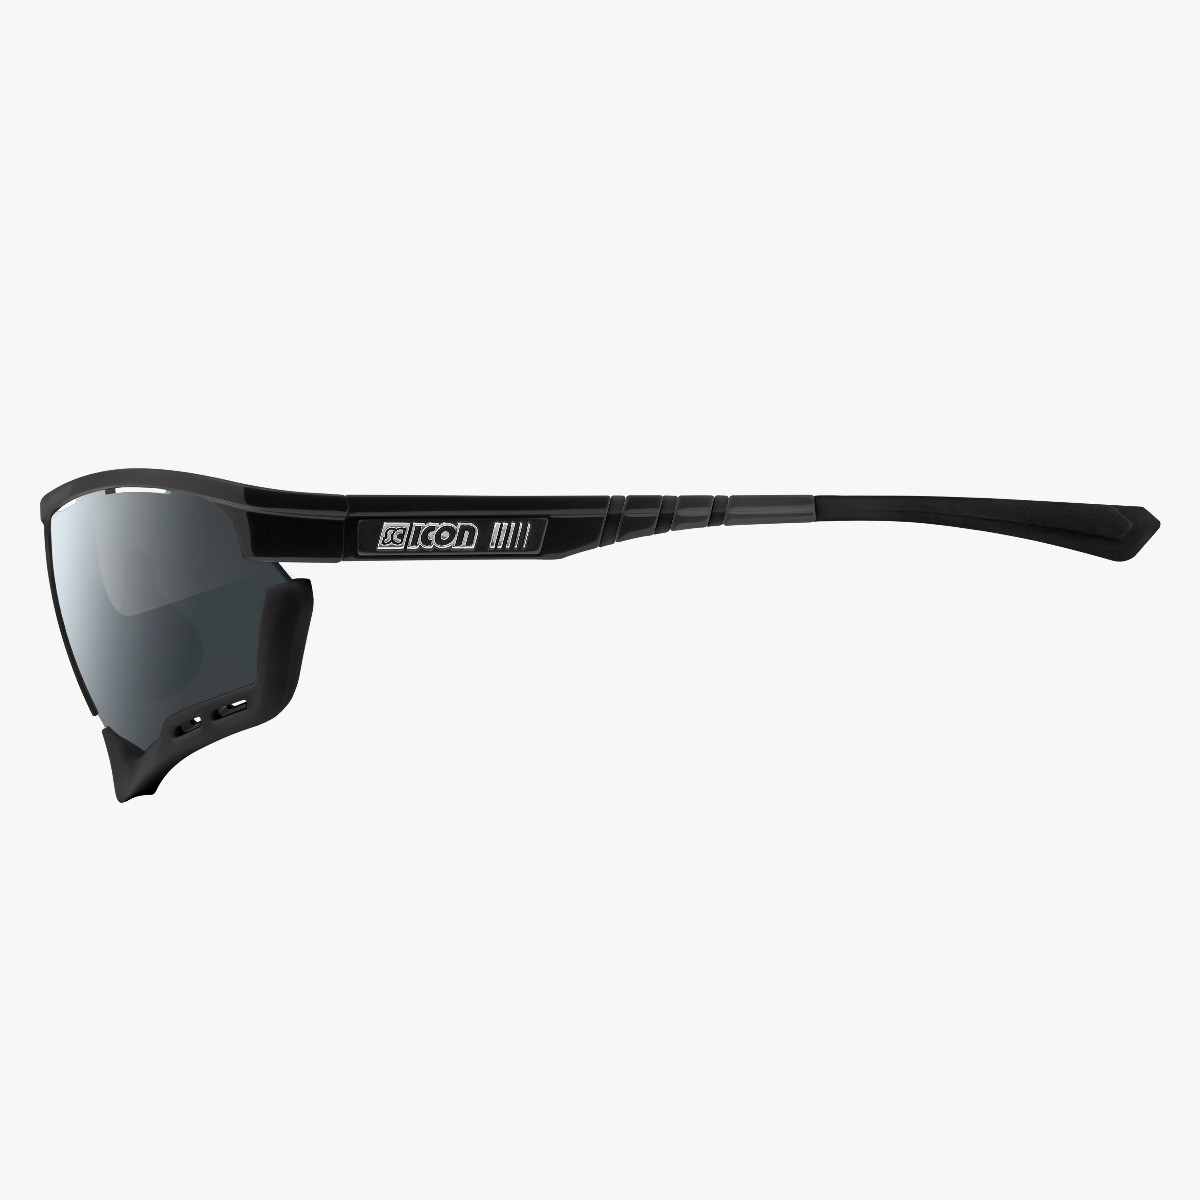 Scicon Sports | Aerocomfort Sport Cycling Performance Sunglasses - Black / Silver - EY15080205
